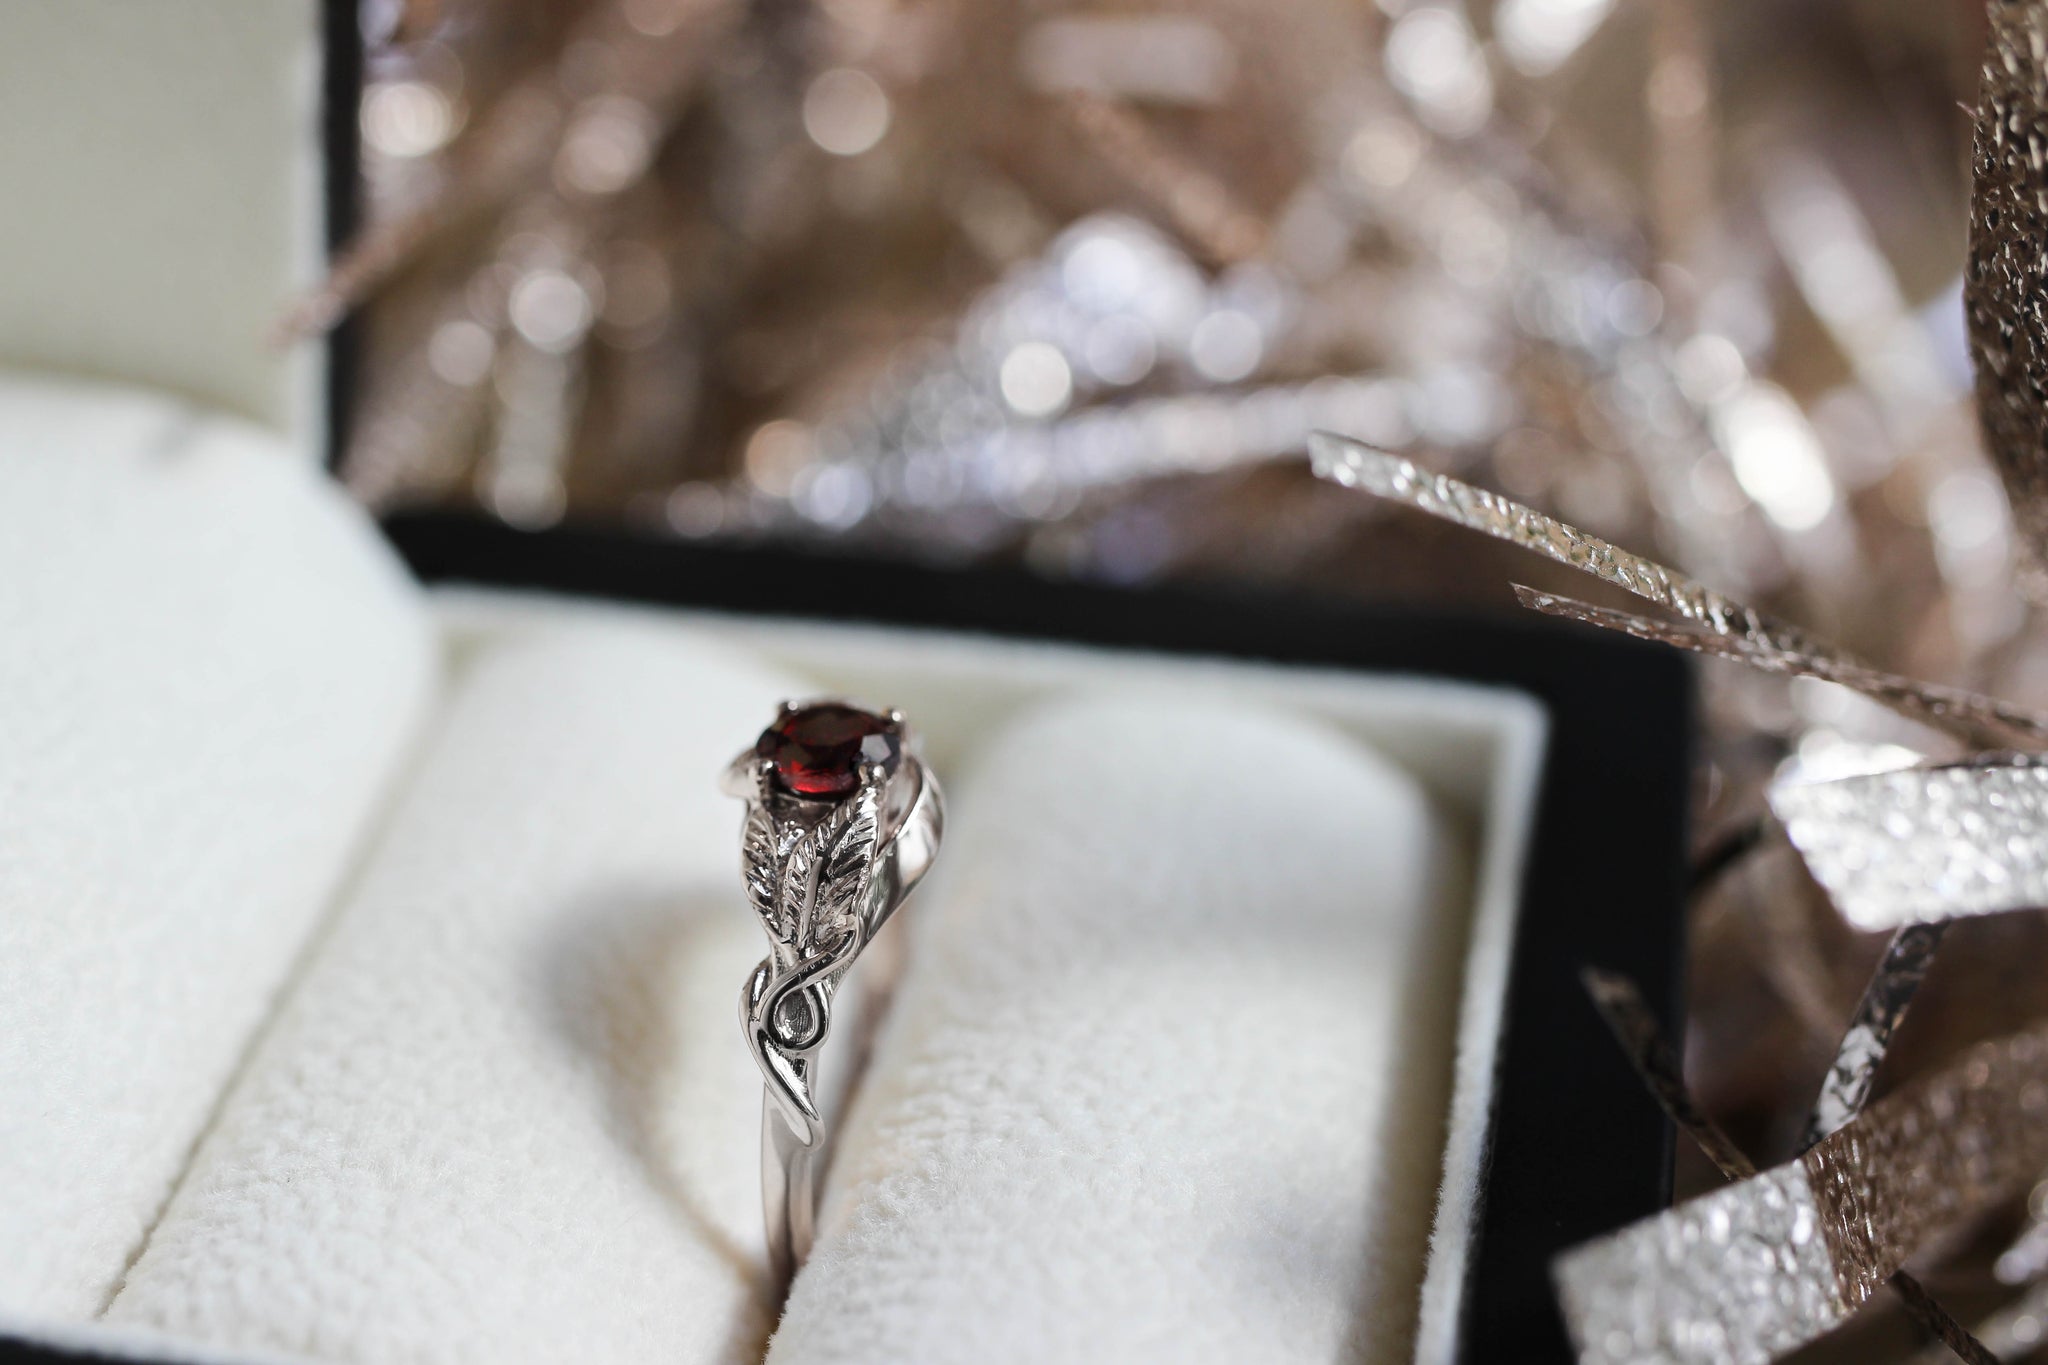 Garnet nature inspired engagement ring / Azalea - Eden Garden Jewelry™